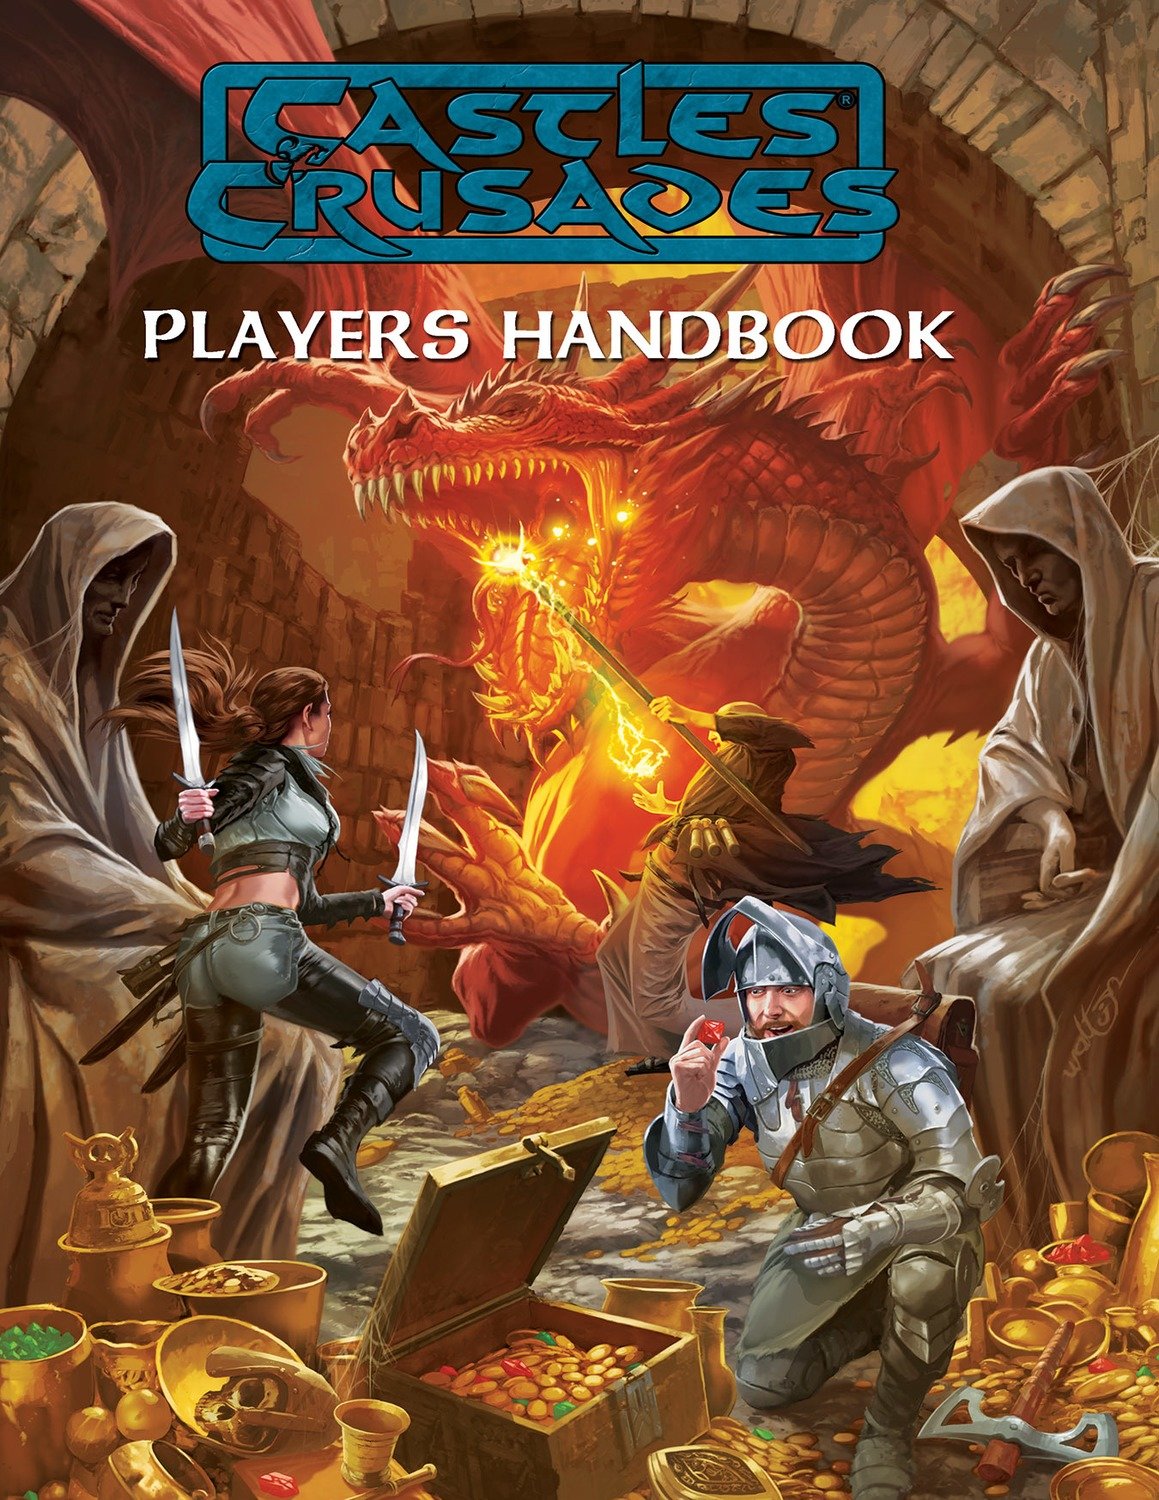 Castles & Crusades Players Handbook 7th Printing - Print and Digital -- Alternate Cover